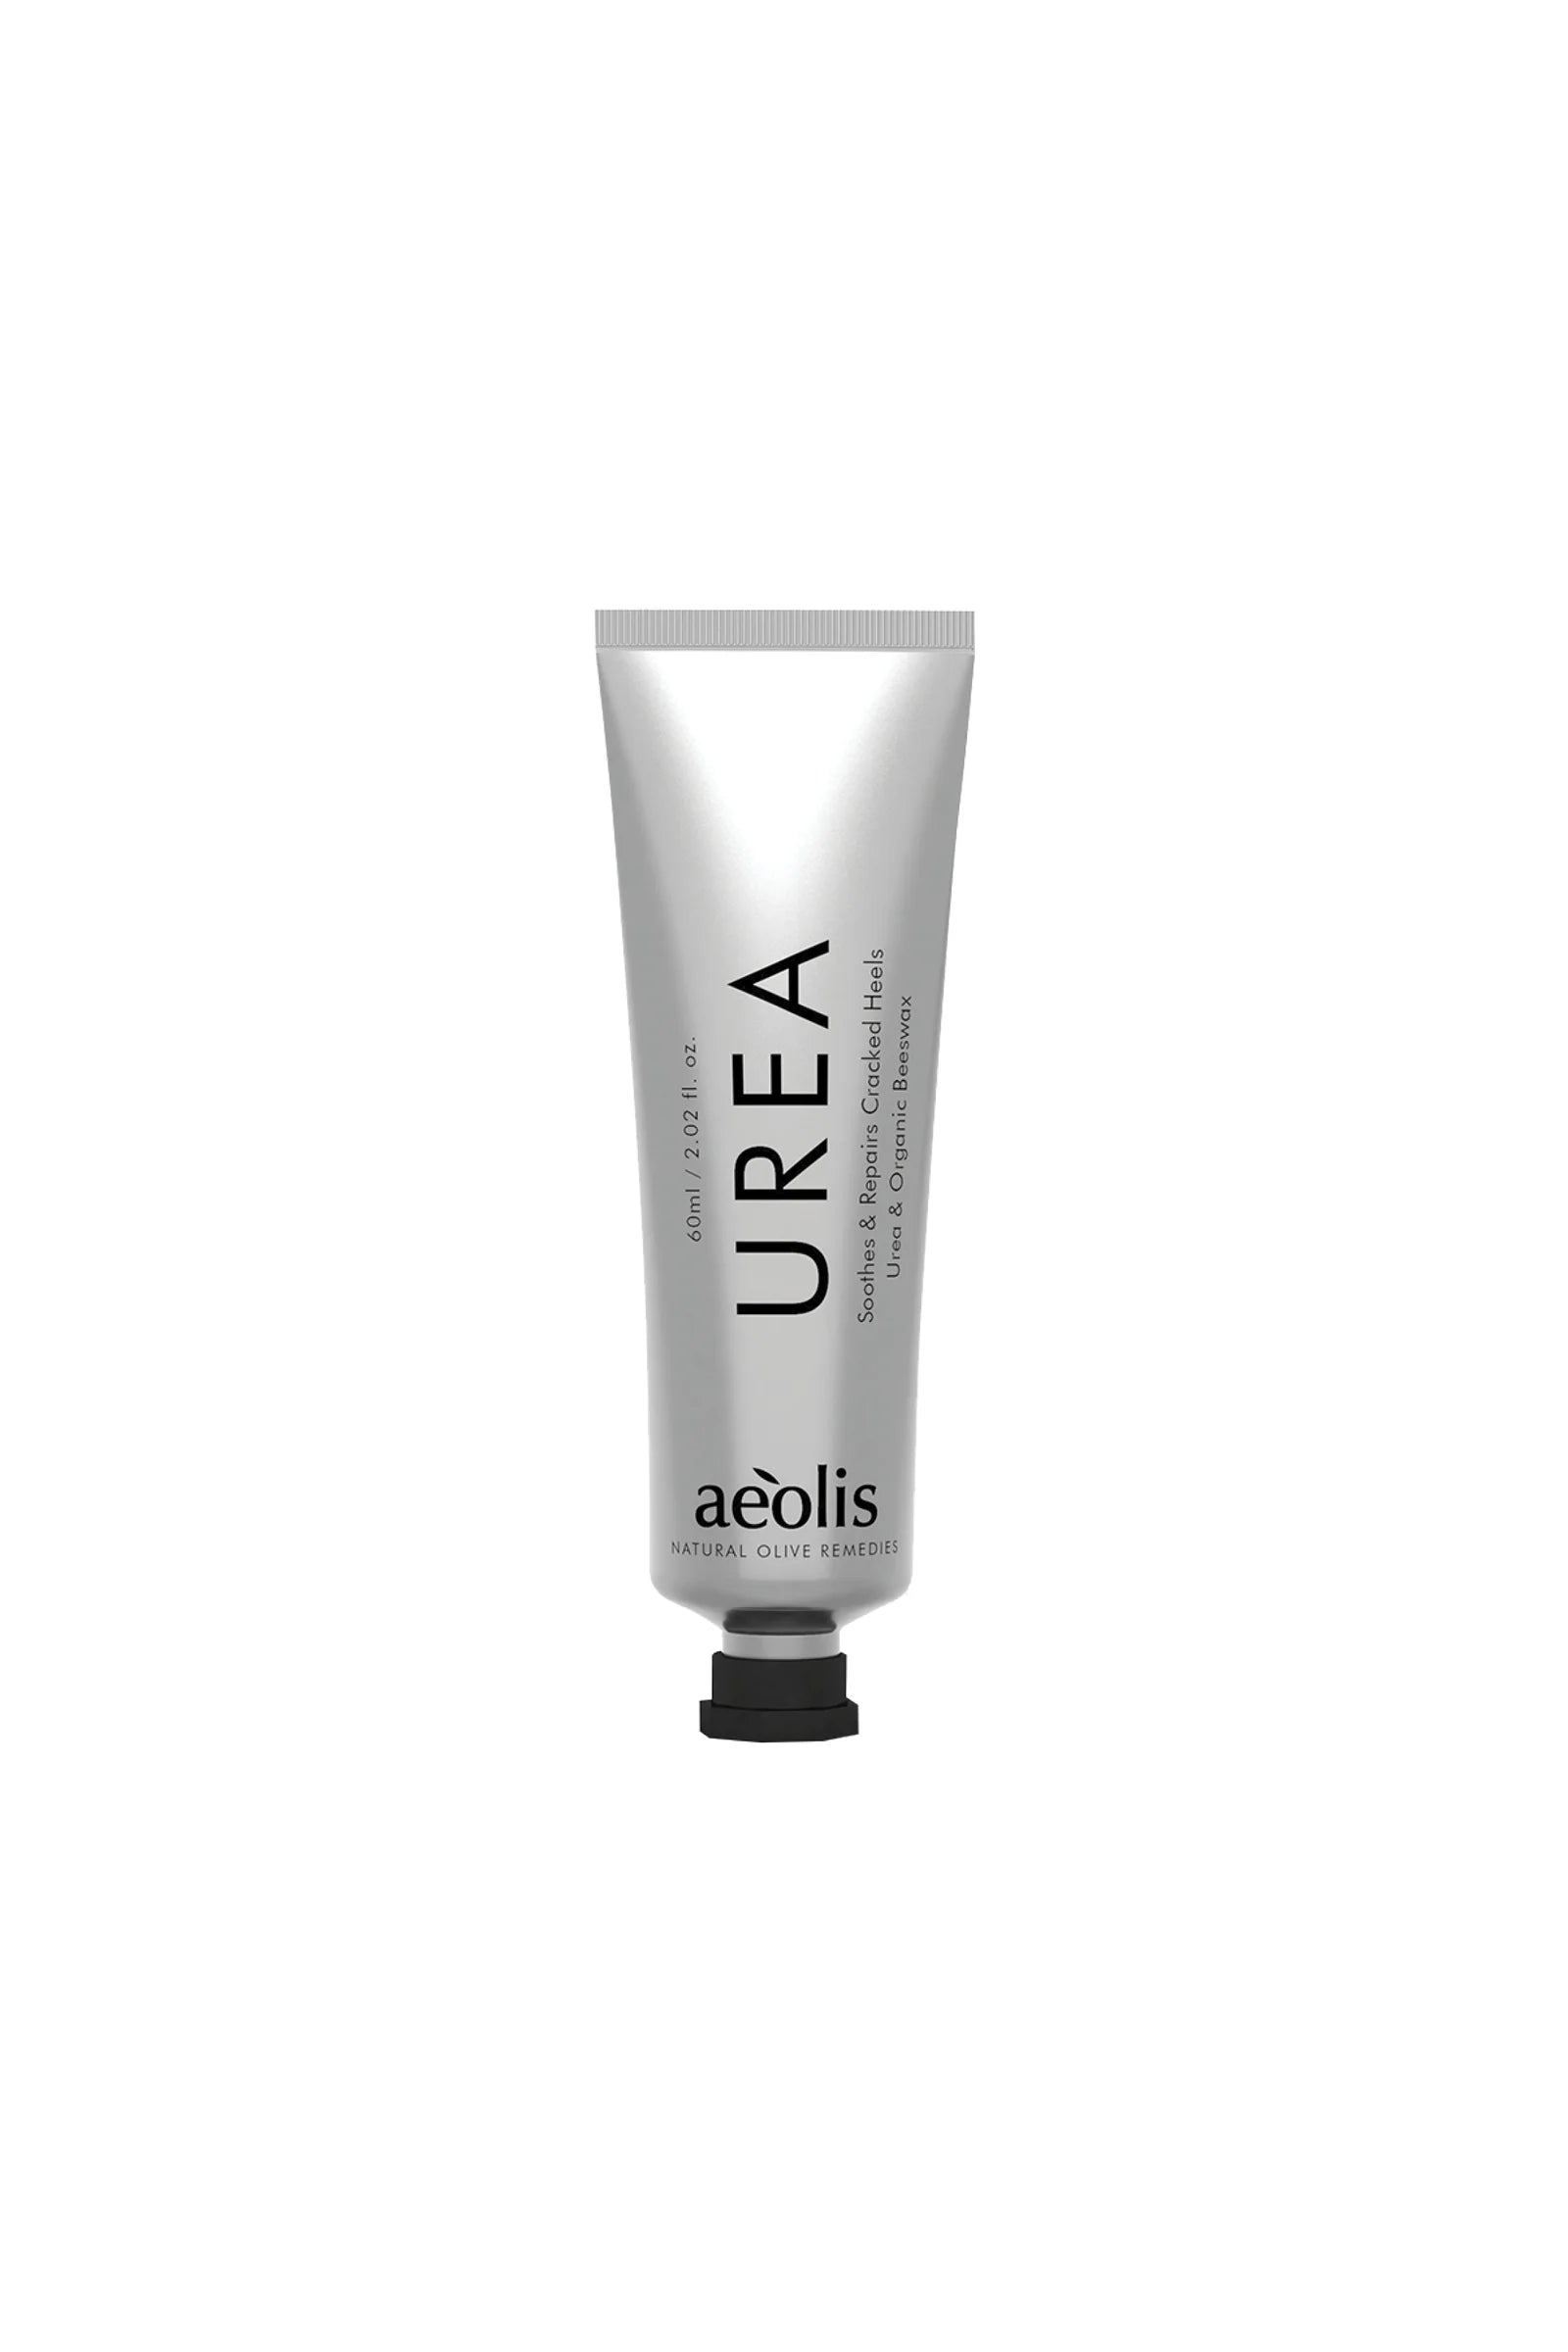 Urea | Cracked Heel Foot Cream with Urea and Organic Beeswax 60ml